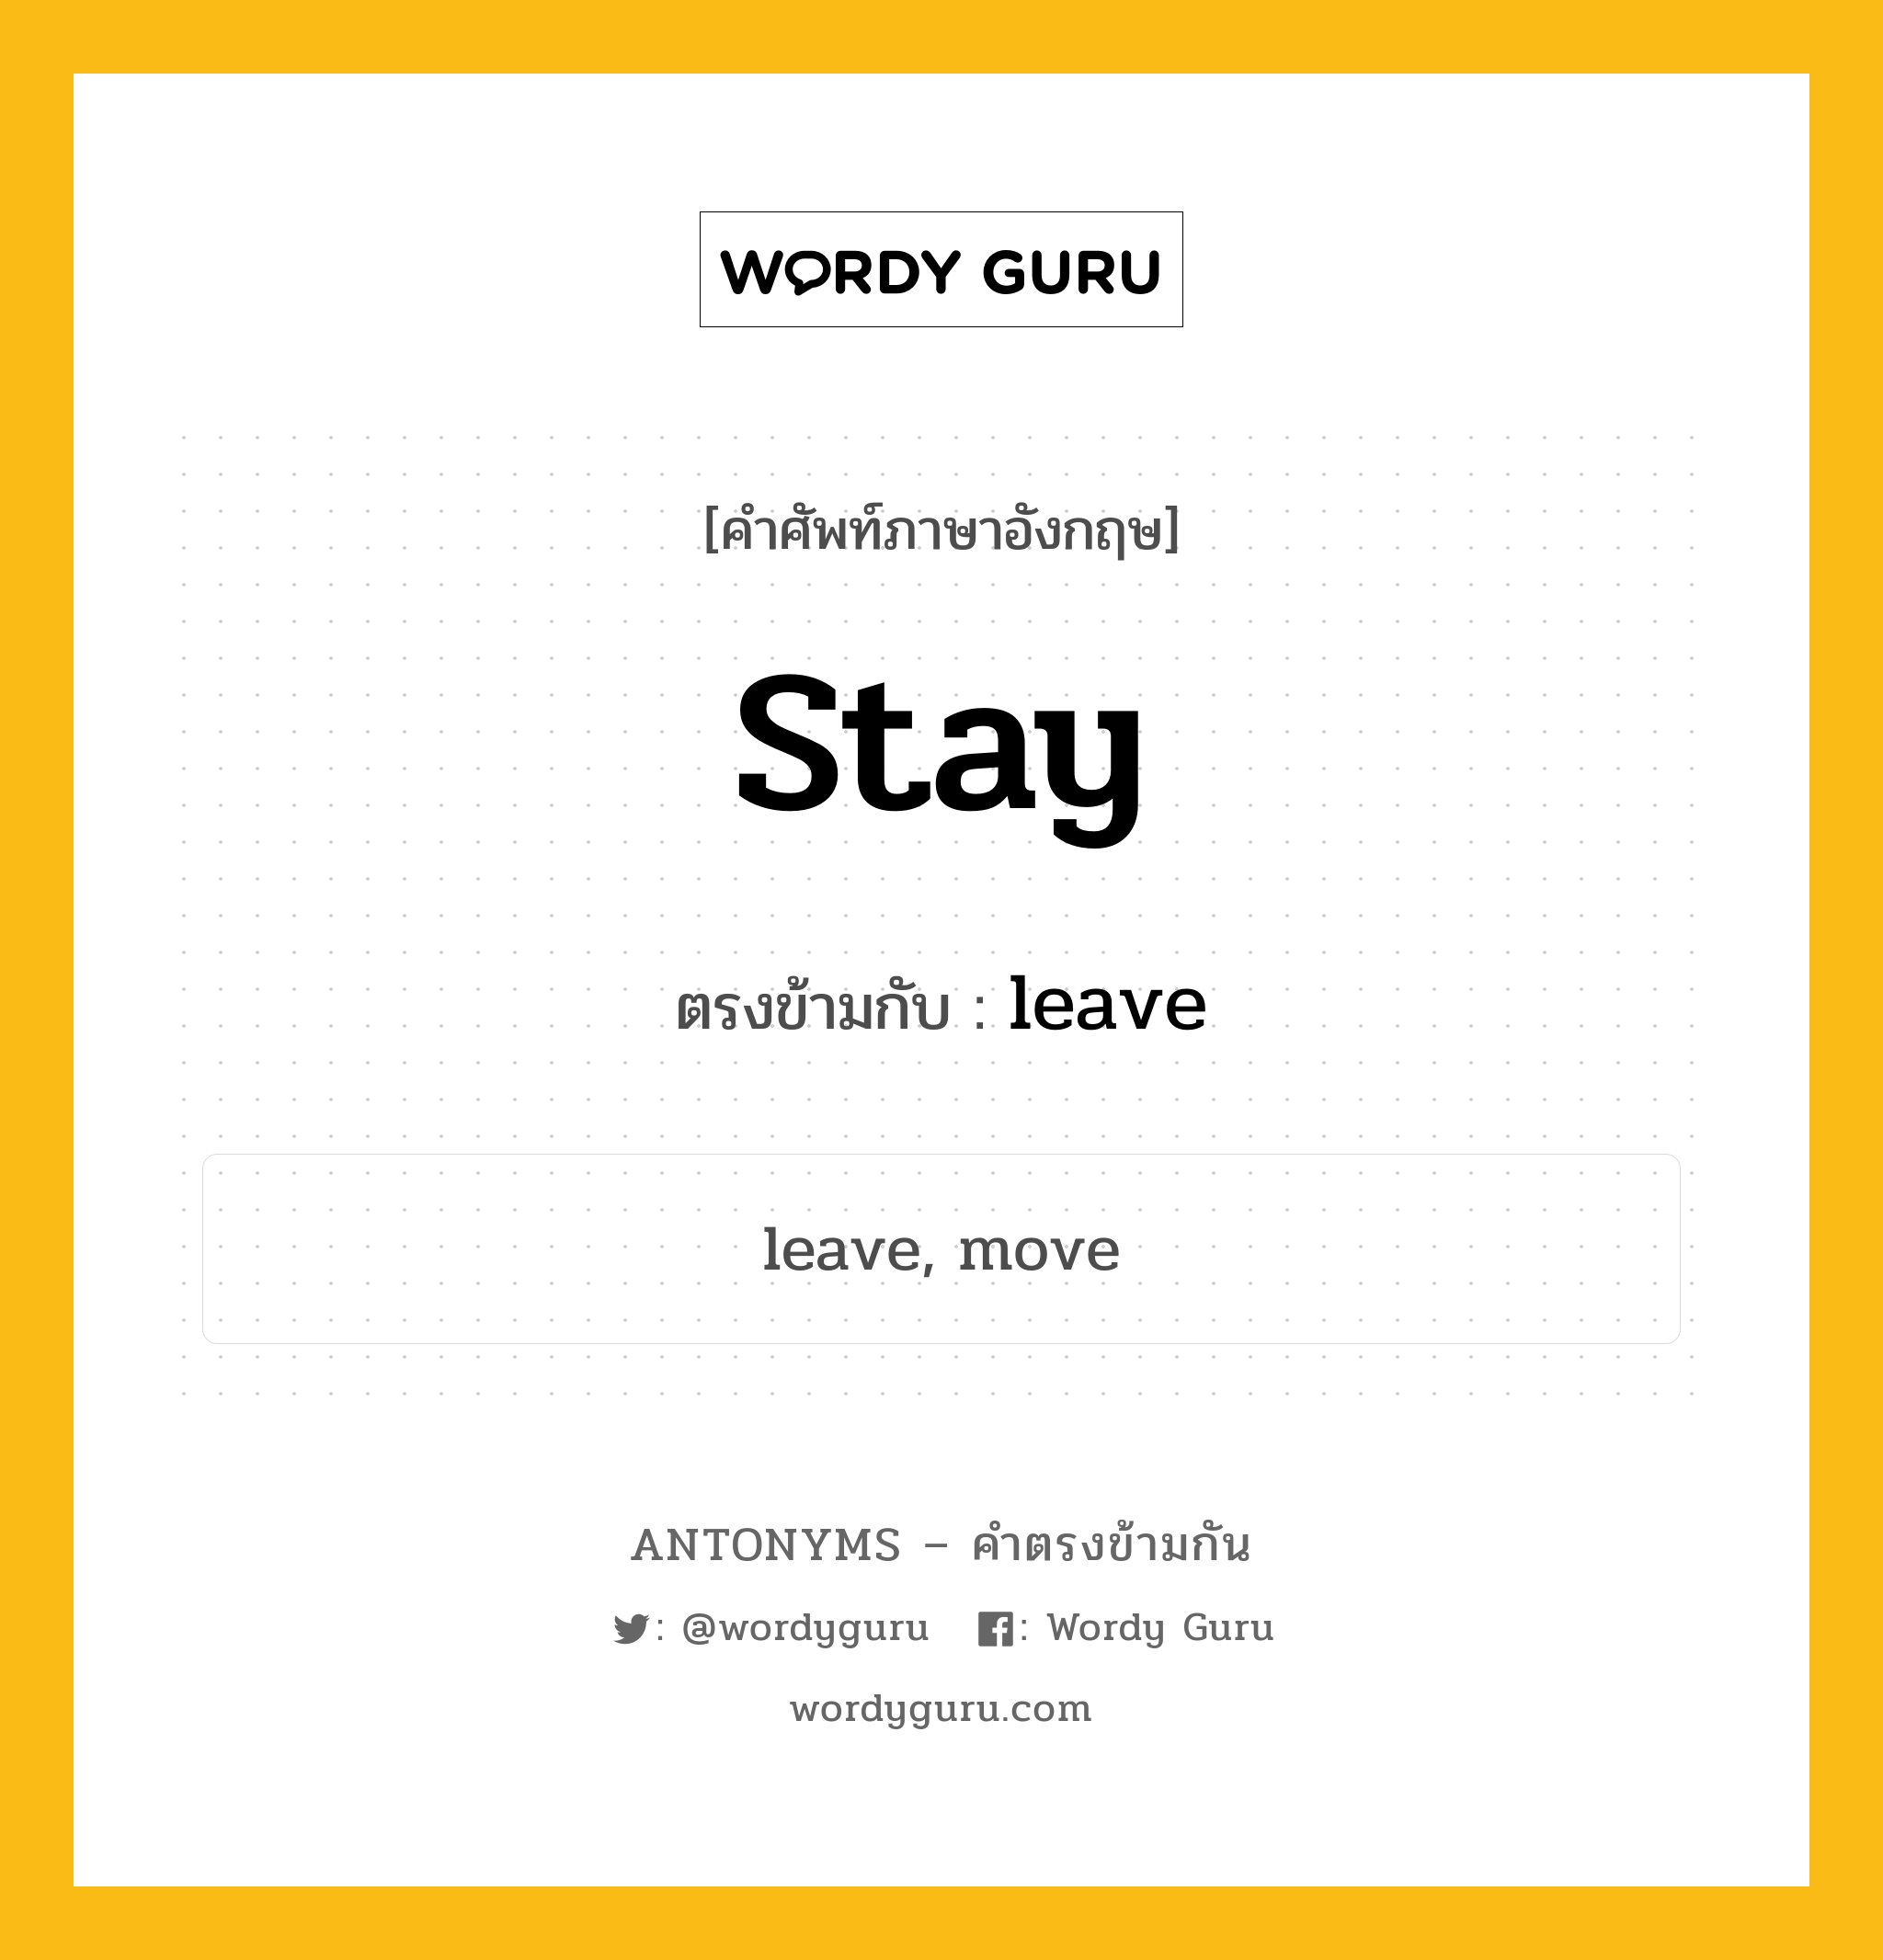 stay เป็นคำตรงข้ามกับคำไหนบ้าง?, คำศัพท์ภาษาอังกฤษ stay ตรงข้ามกับ leave หมวด leave